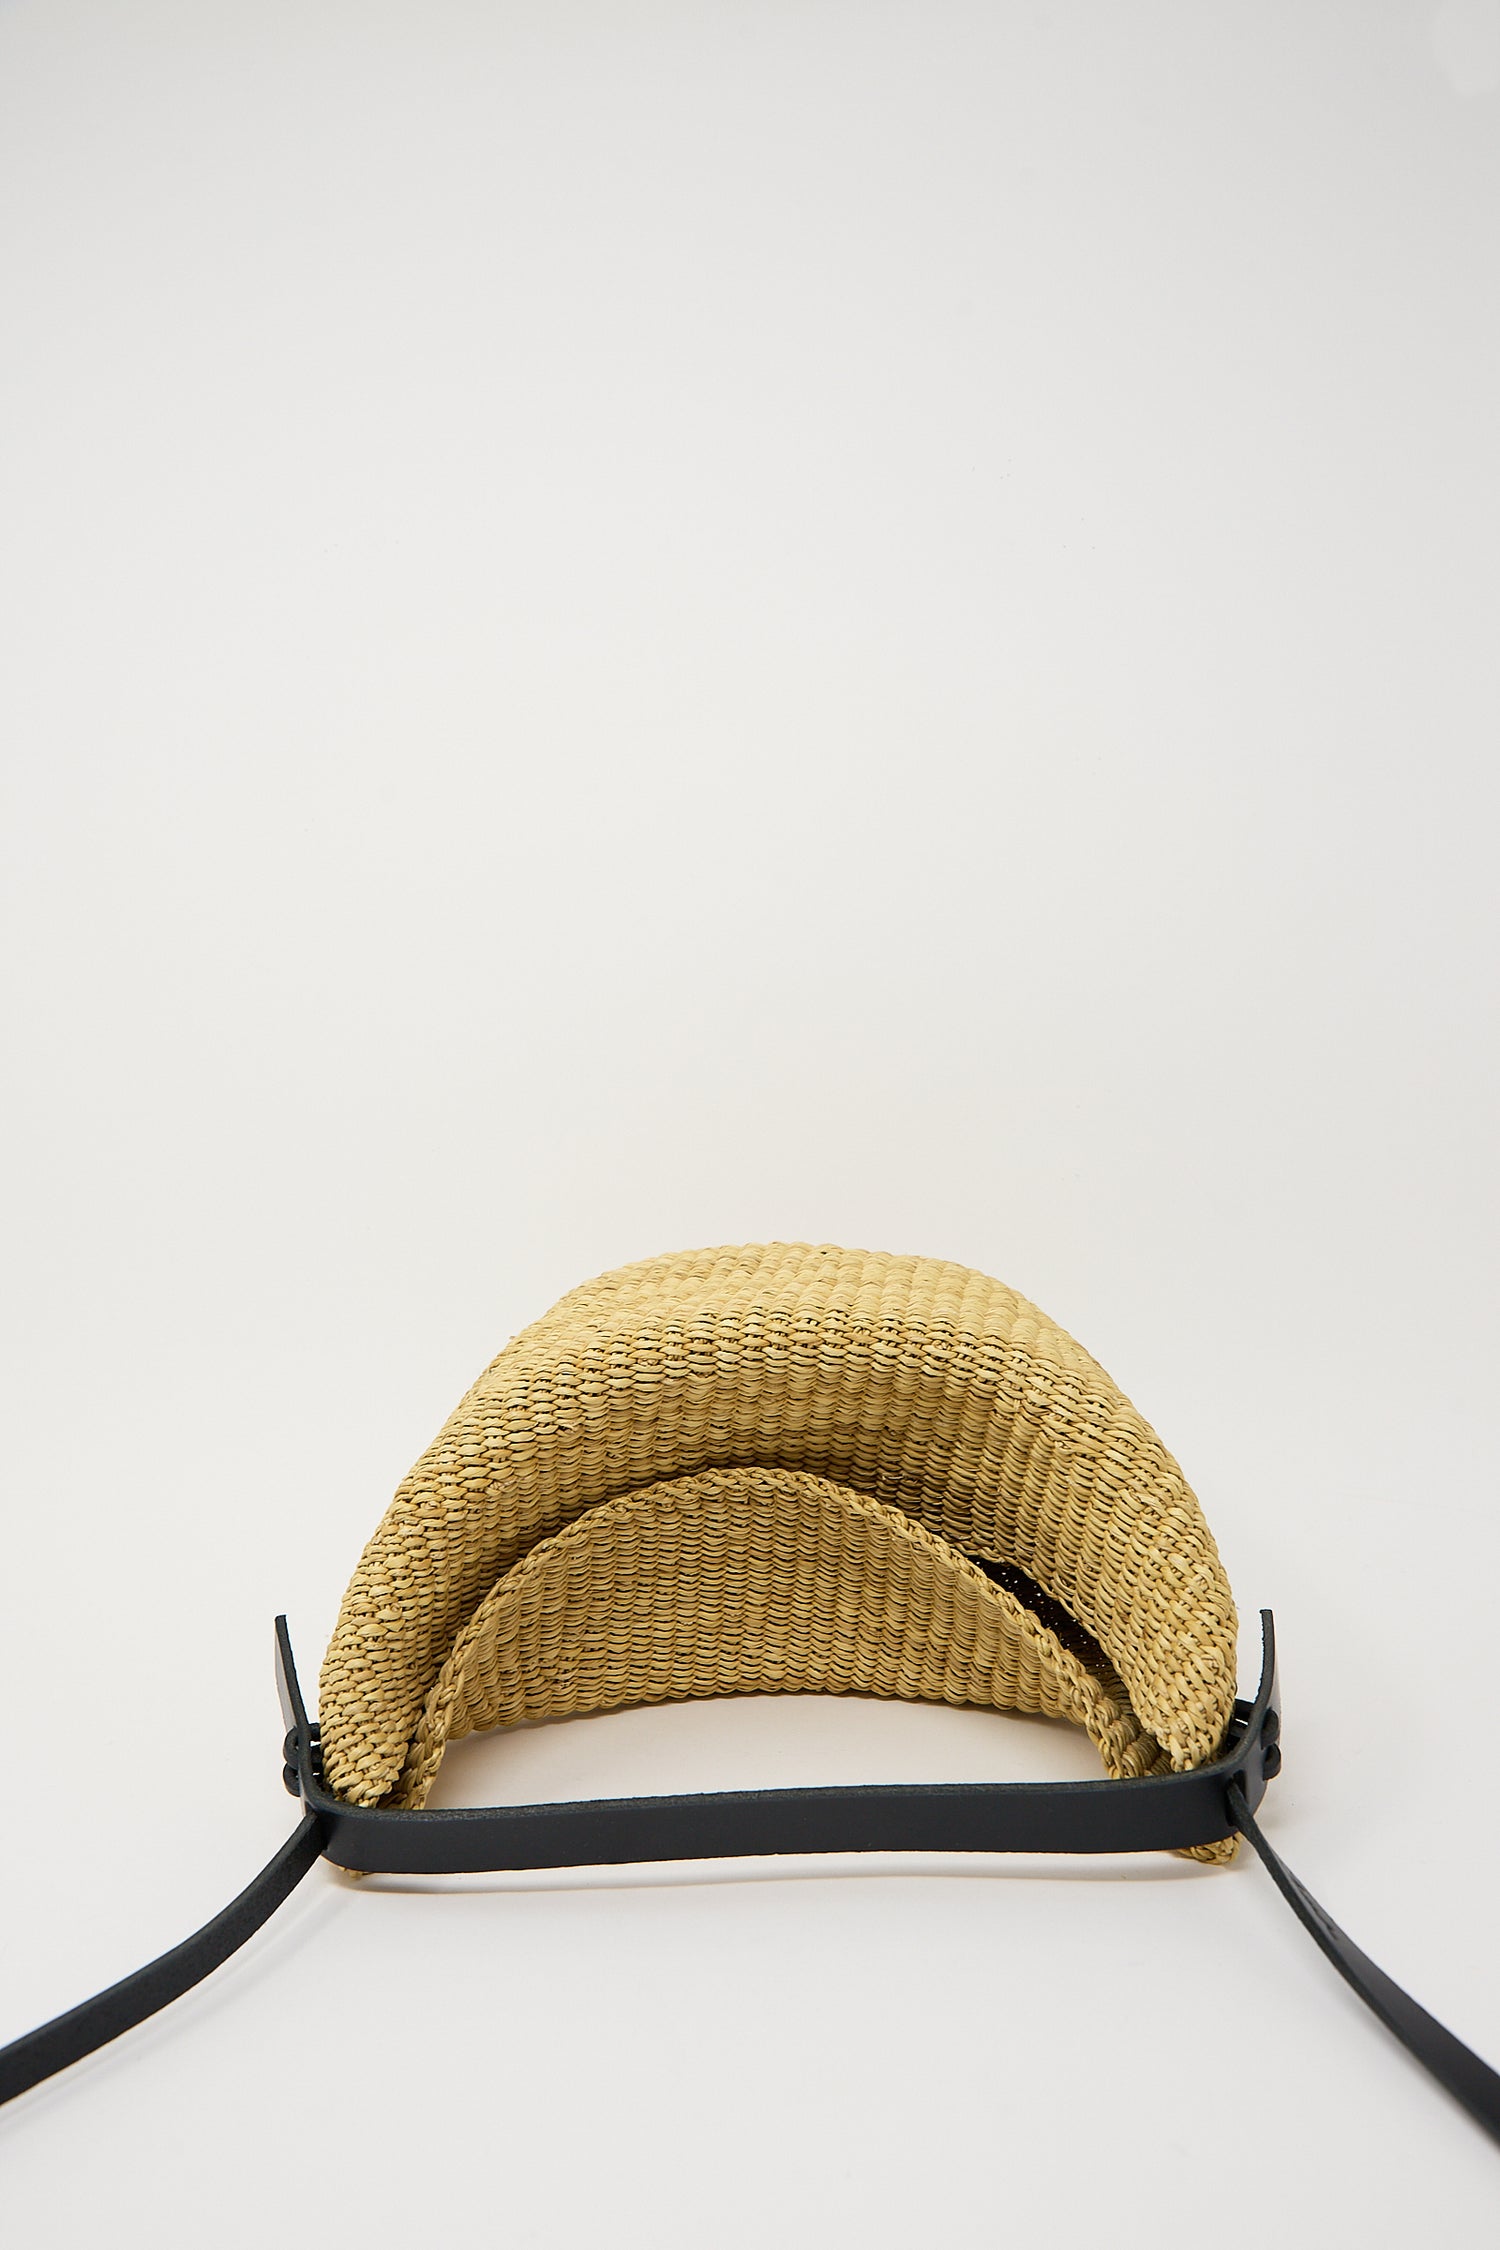 Straw sun visor cap made of elephant grass on a white background.